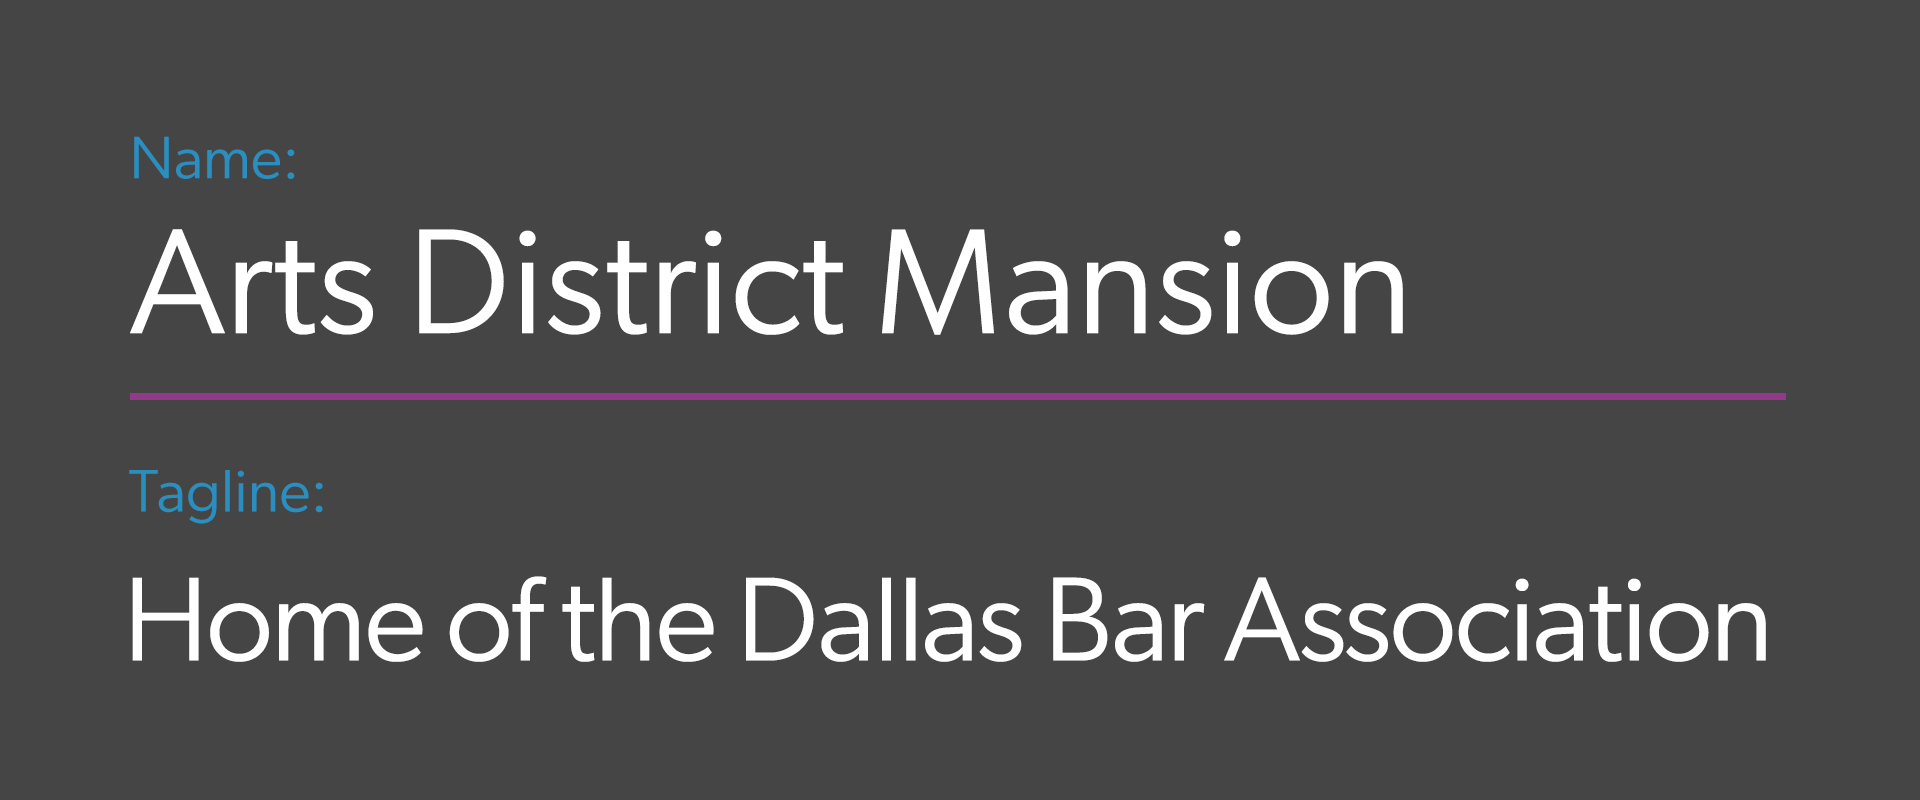 Media item displaying Dallas Bar Association